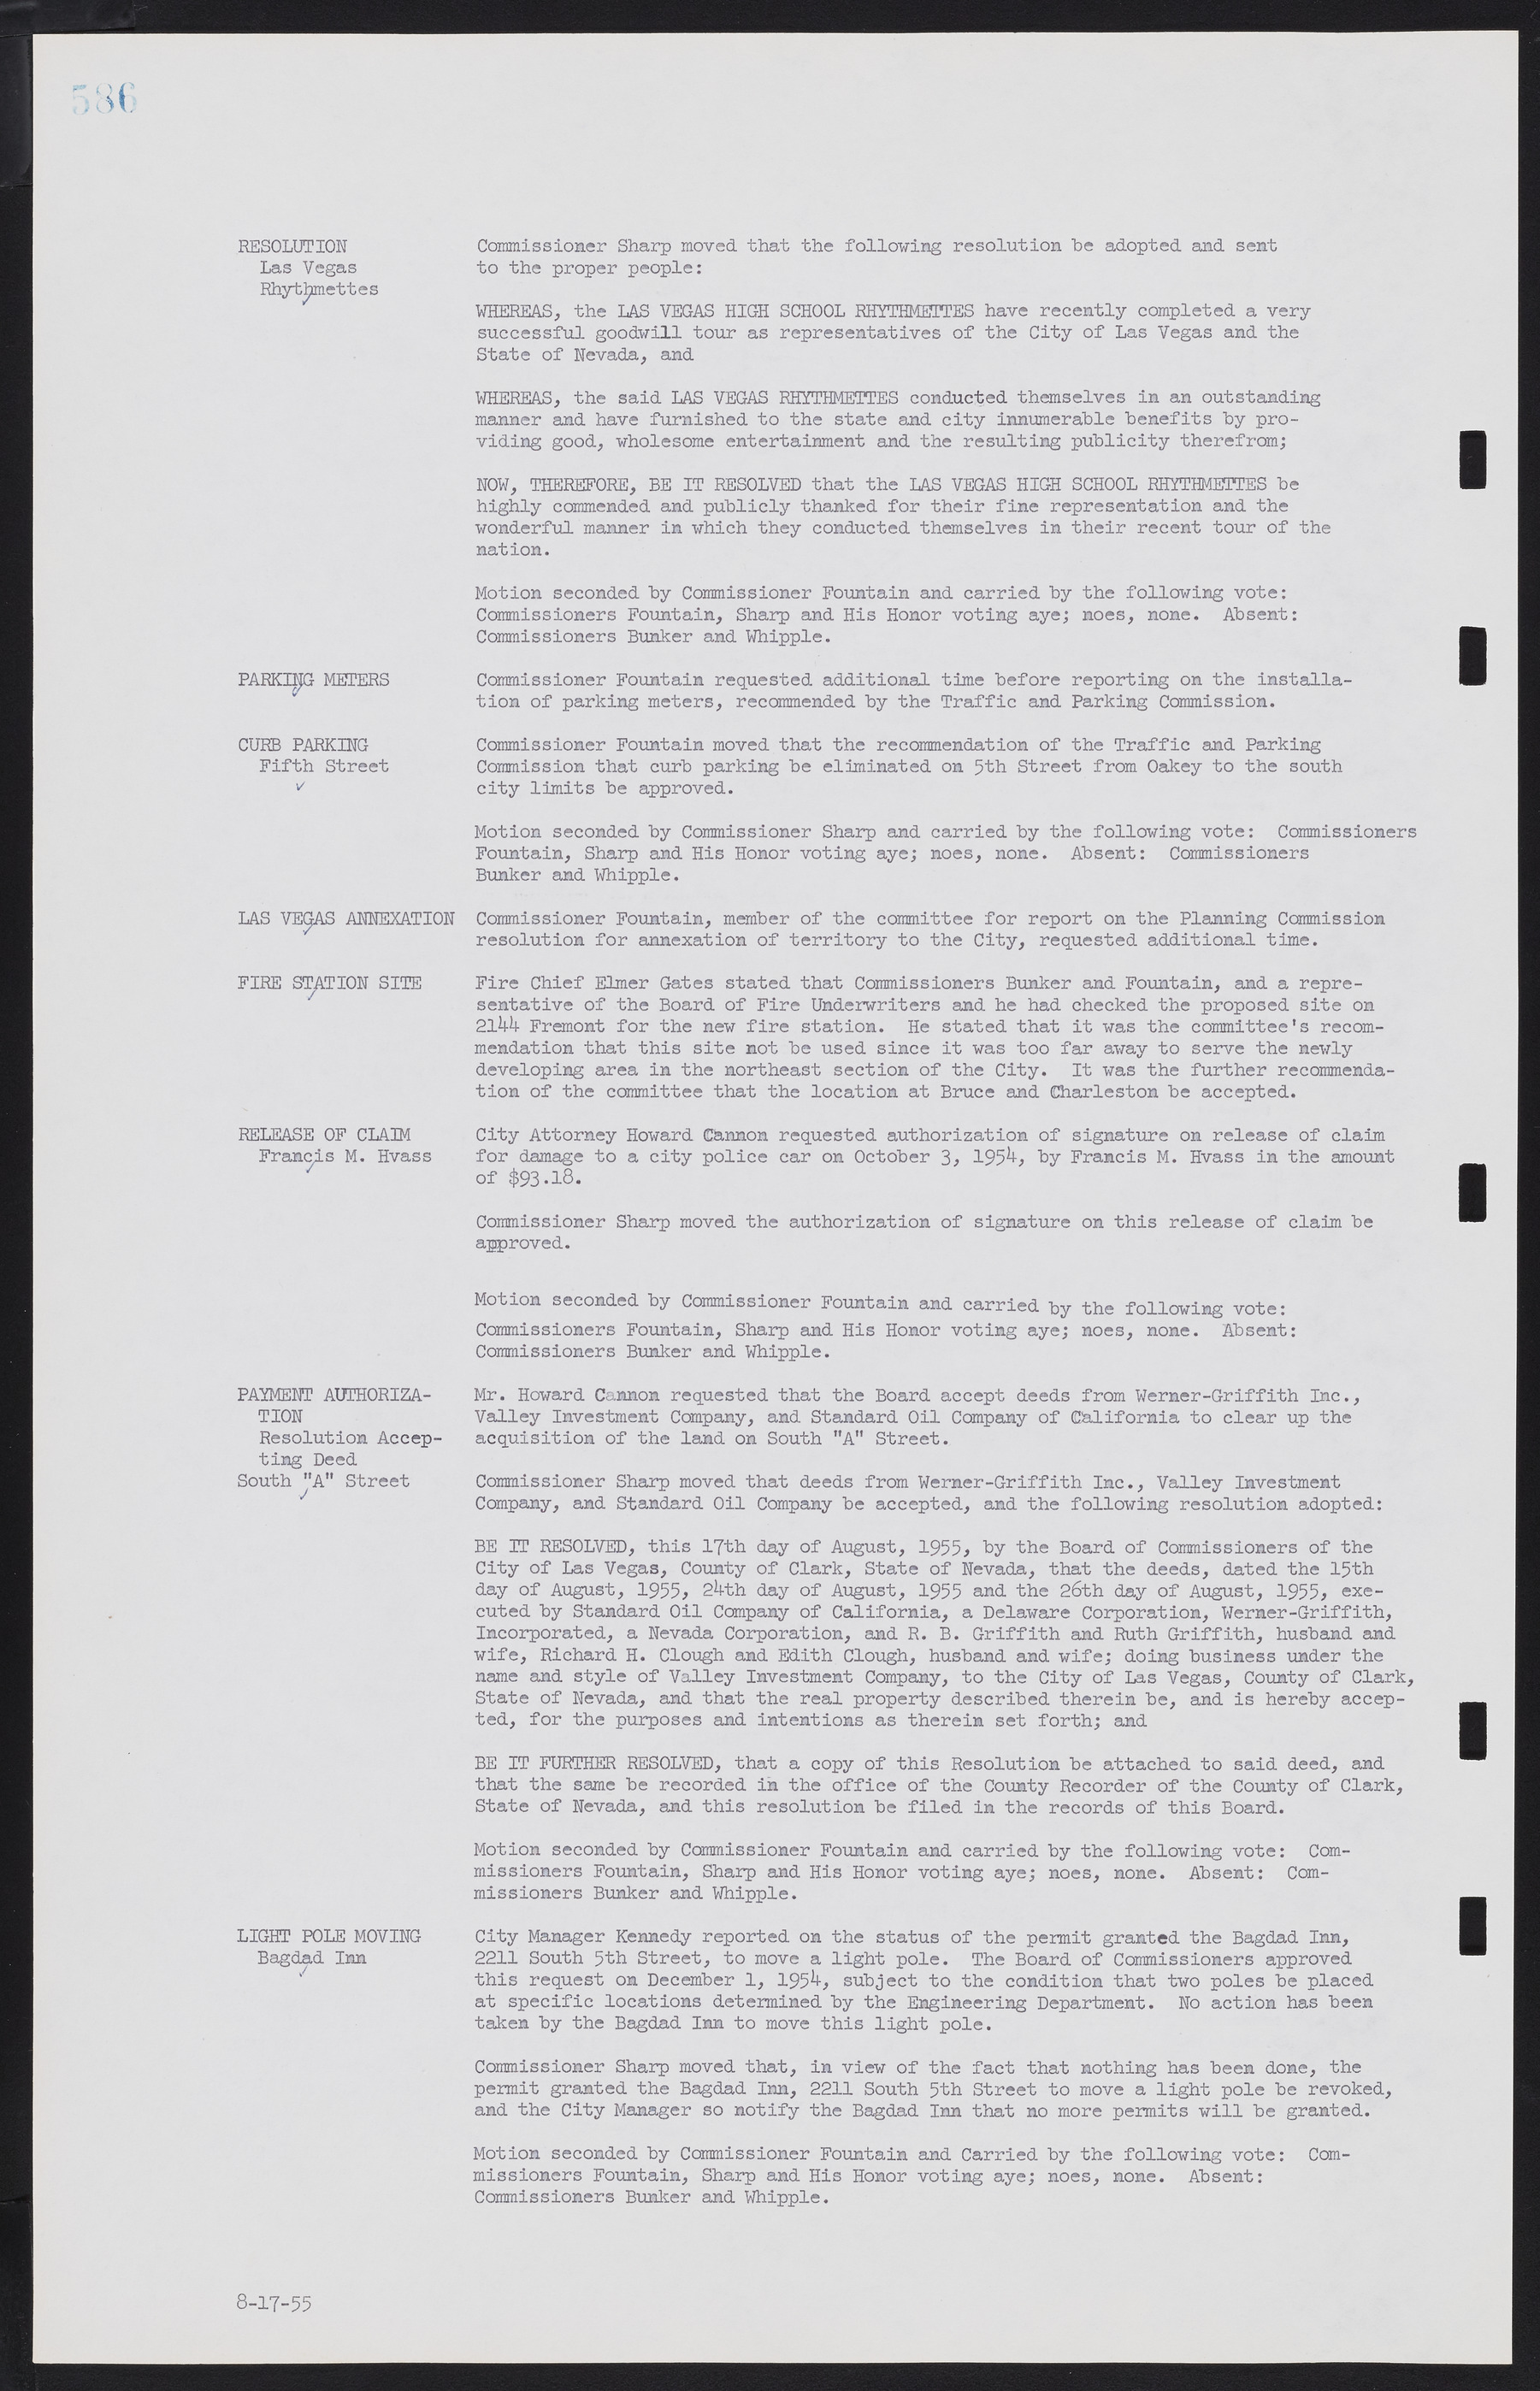 Las Vegas City Commission Minutes, February 17, 1954 to September 21, 1955, lvc000009-592